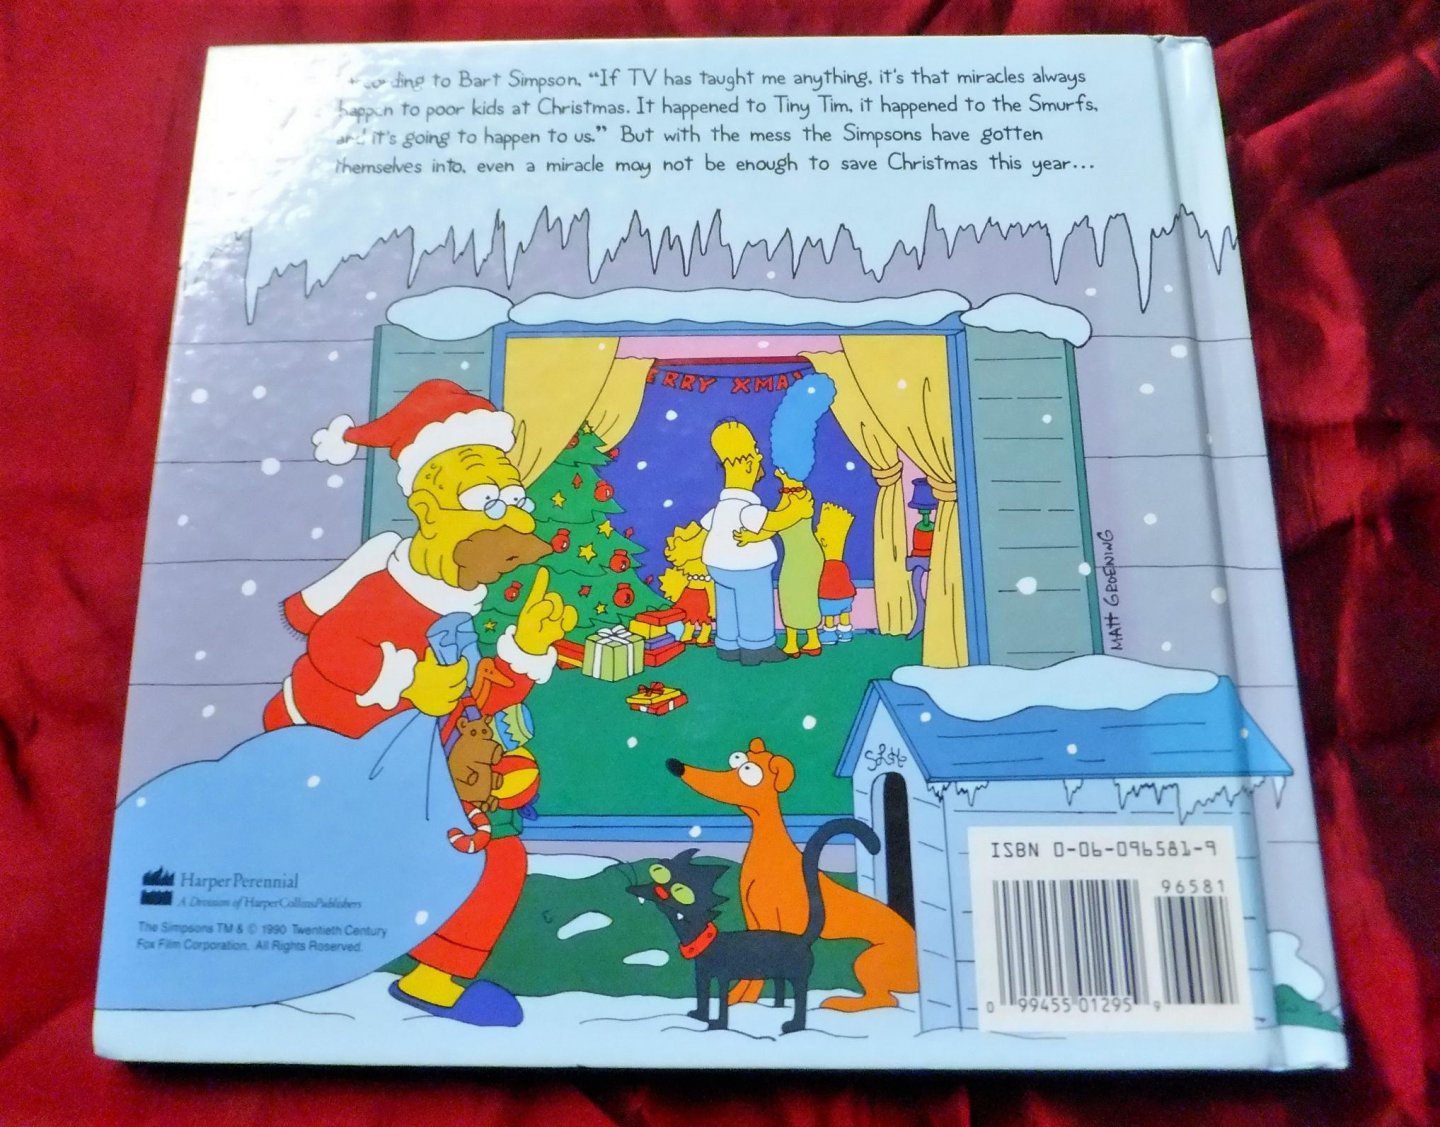 Groening, Matt - The Simpsons Xmas Book